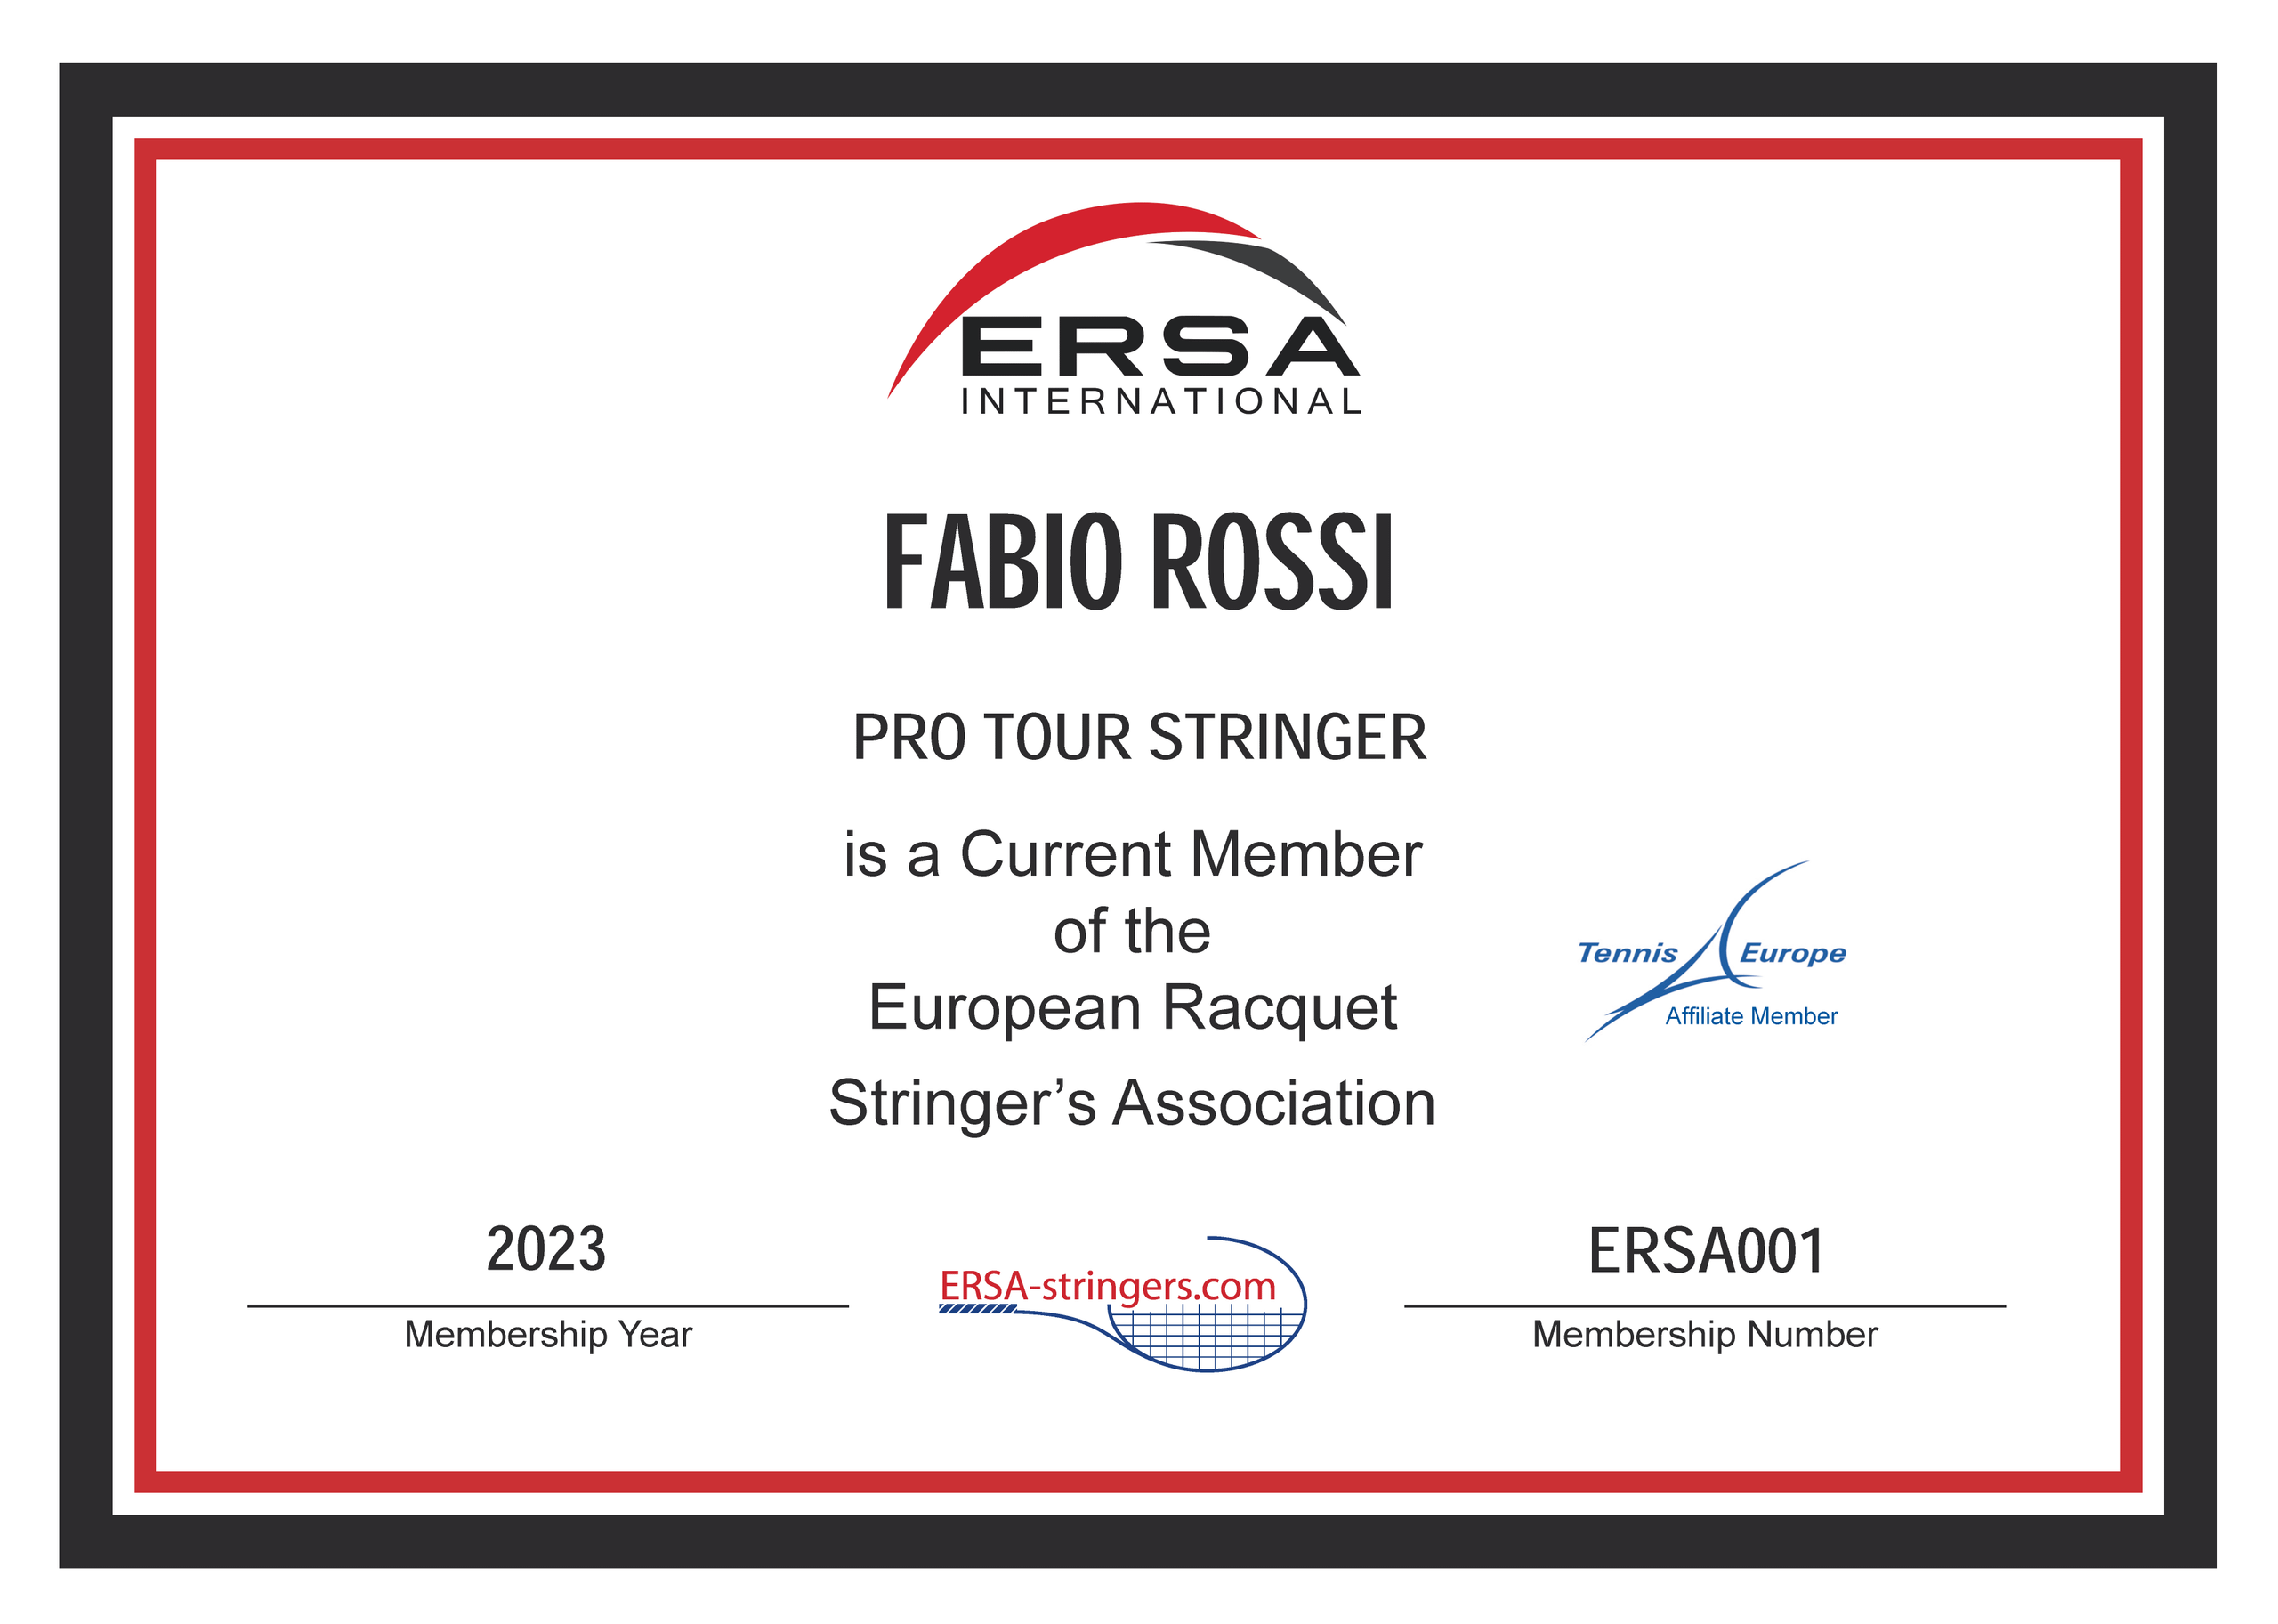 Certificazione ERSA Pro Tour Stringer